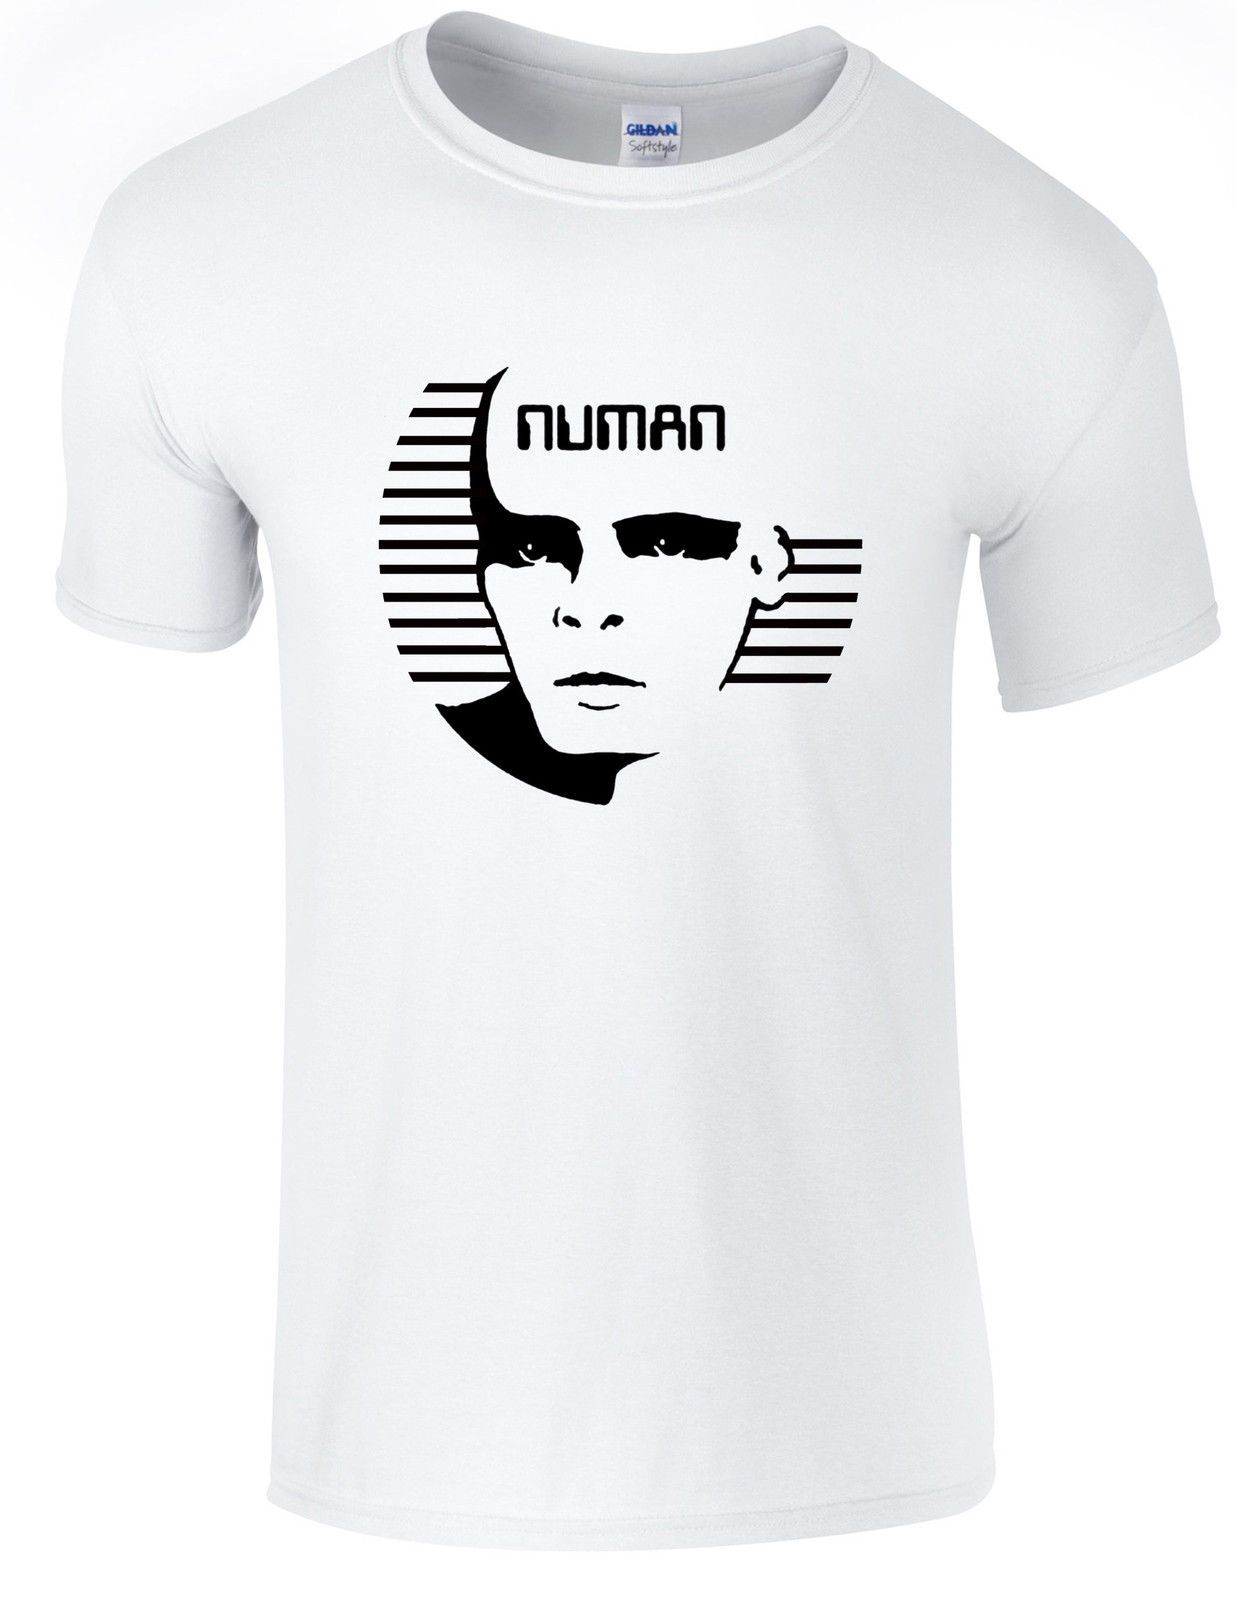 Gary Numan Logo Black Herren T-shirt Men Rock Band Tee Shirt